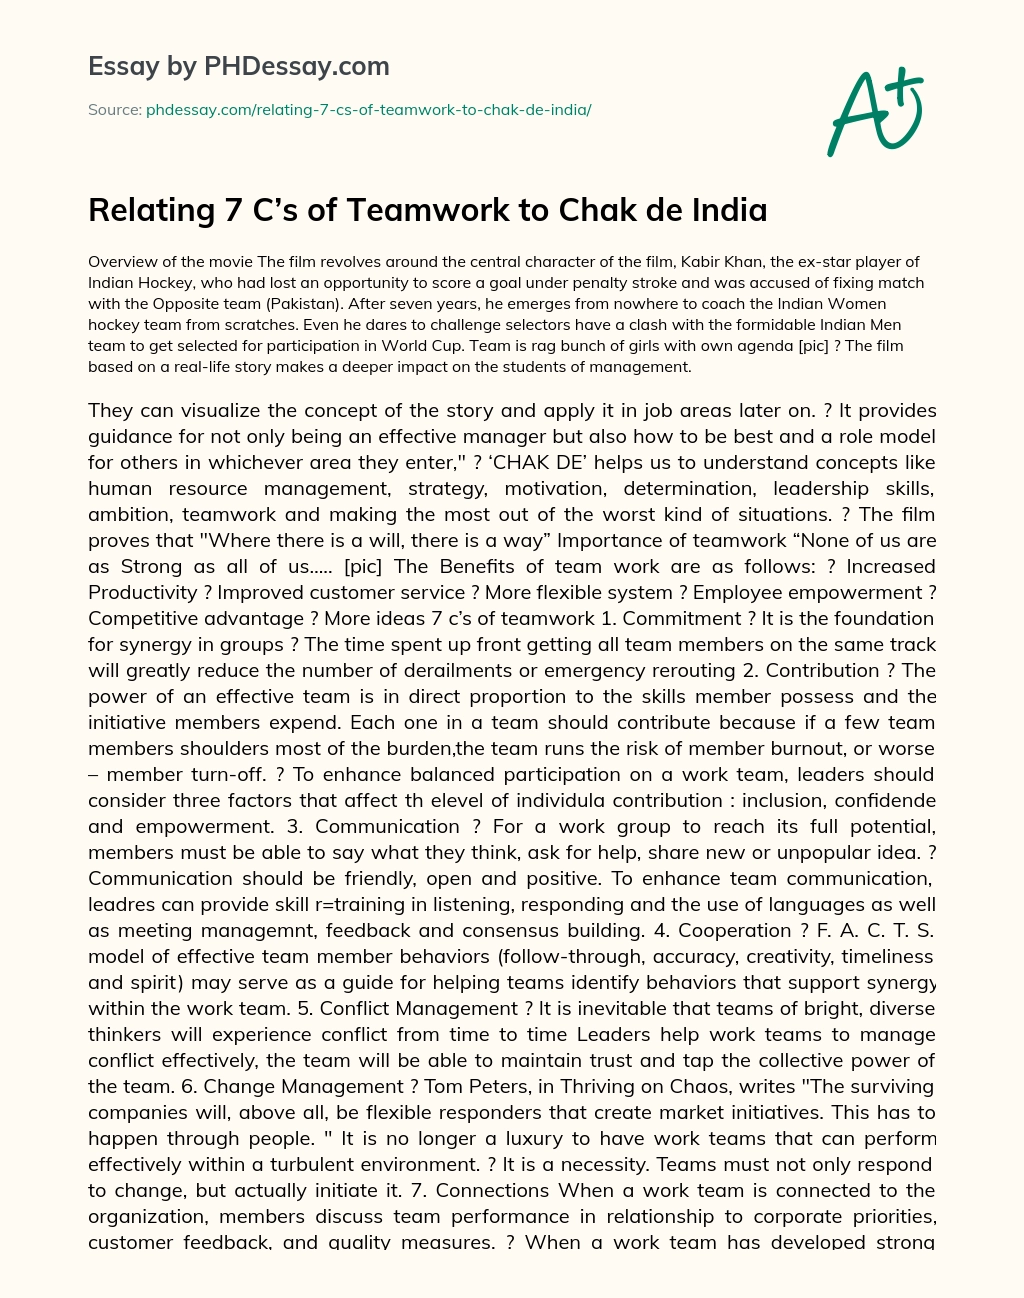 Relating 7 C’s of Teamwork to Chak de India essay